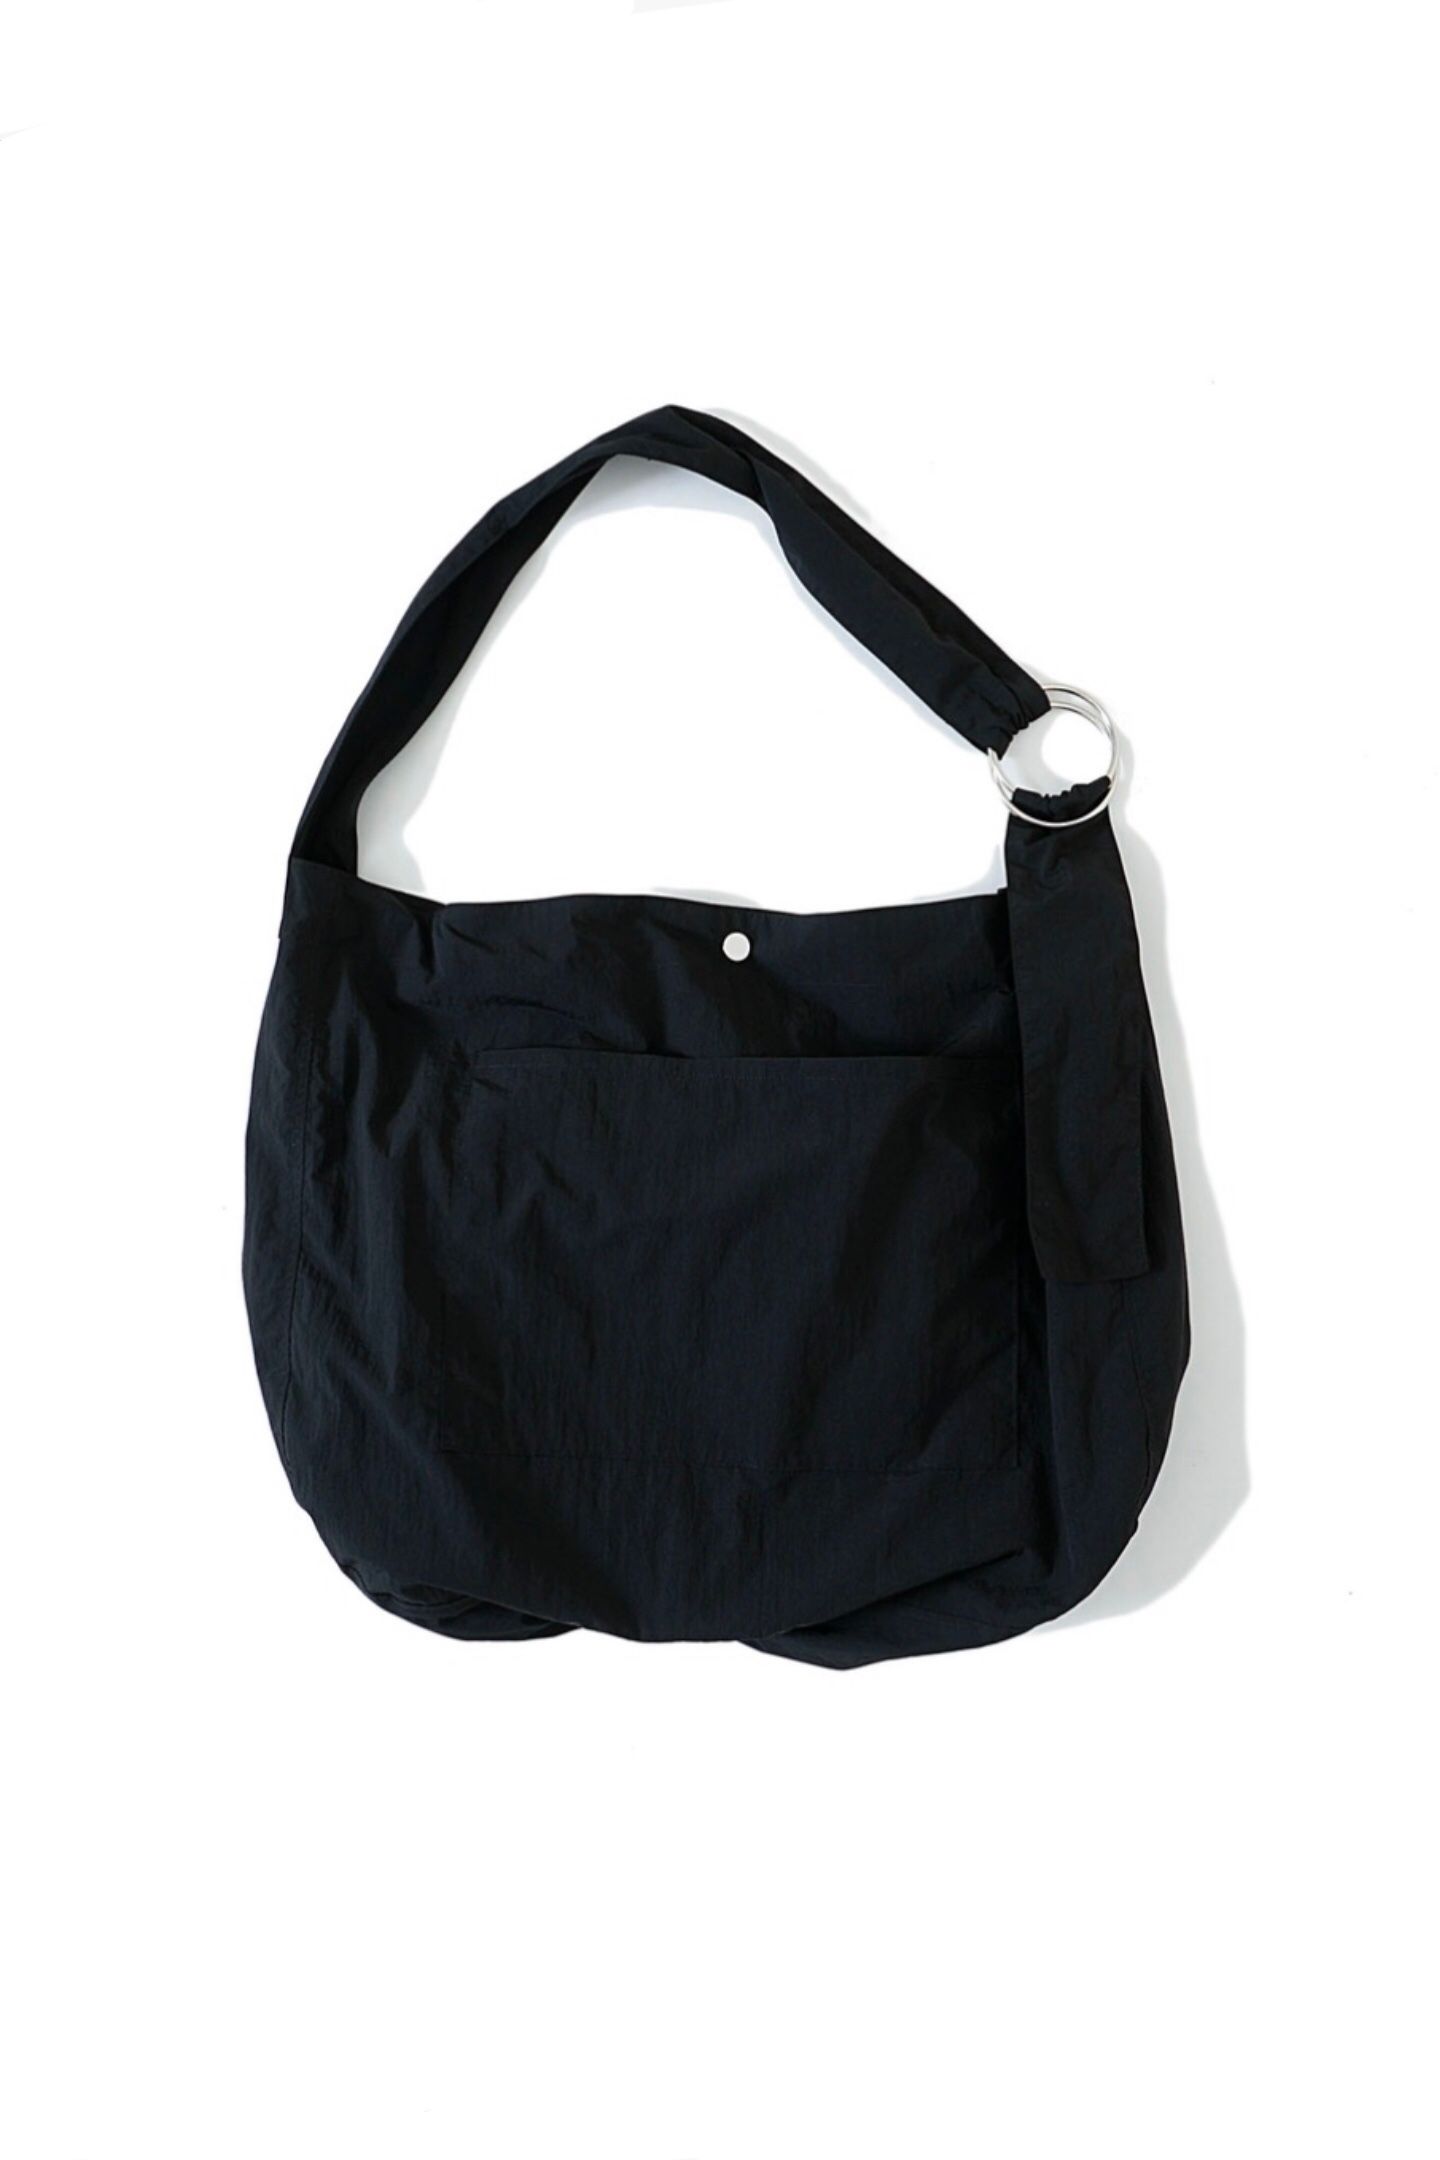 MY___ - 【先行予約】nylon shoulder bag -black- 23ss 2月頃入荷予定 ...